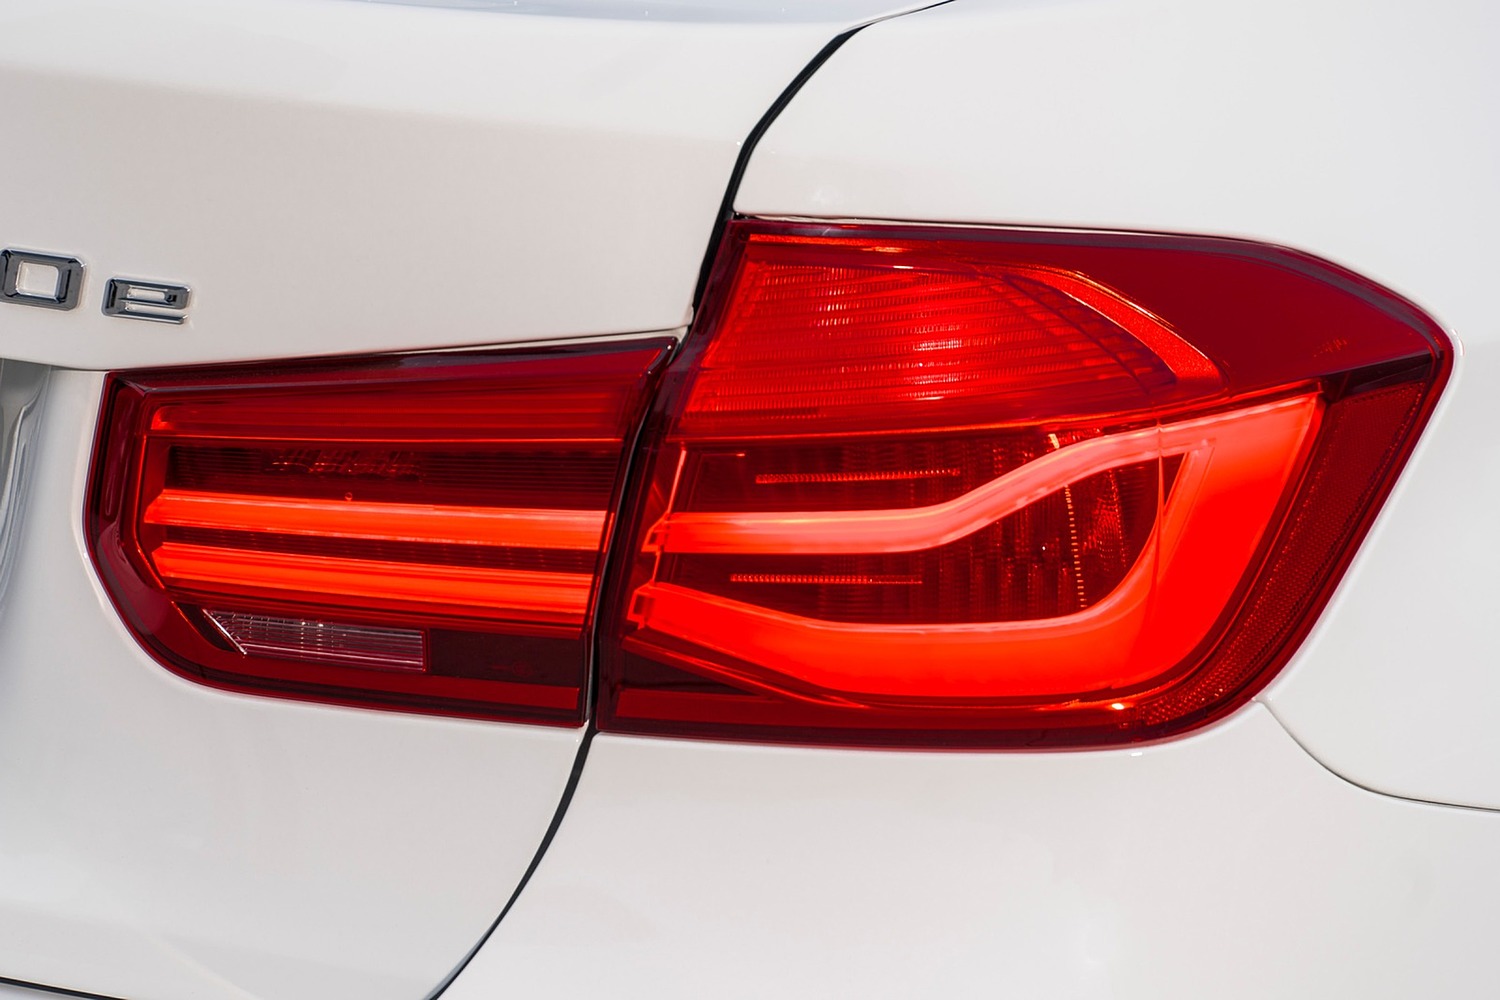 BMW 3 Series 330e iPerformance Sedan Exterior Detail (2017 model year shown)